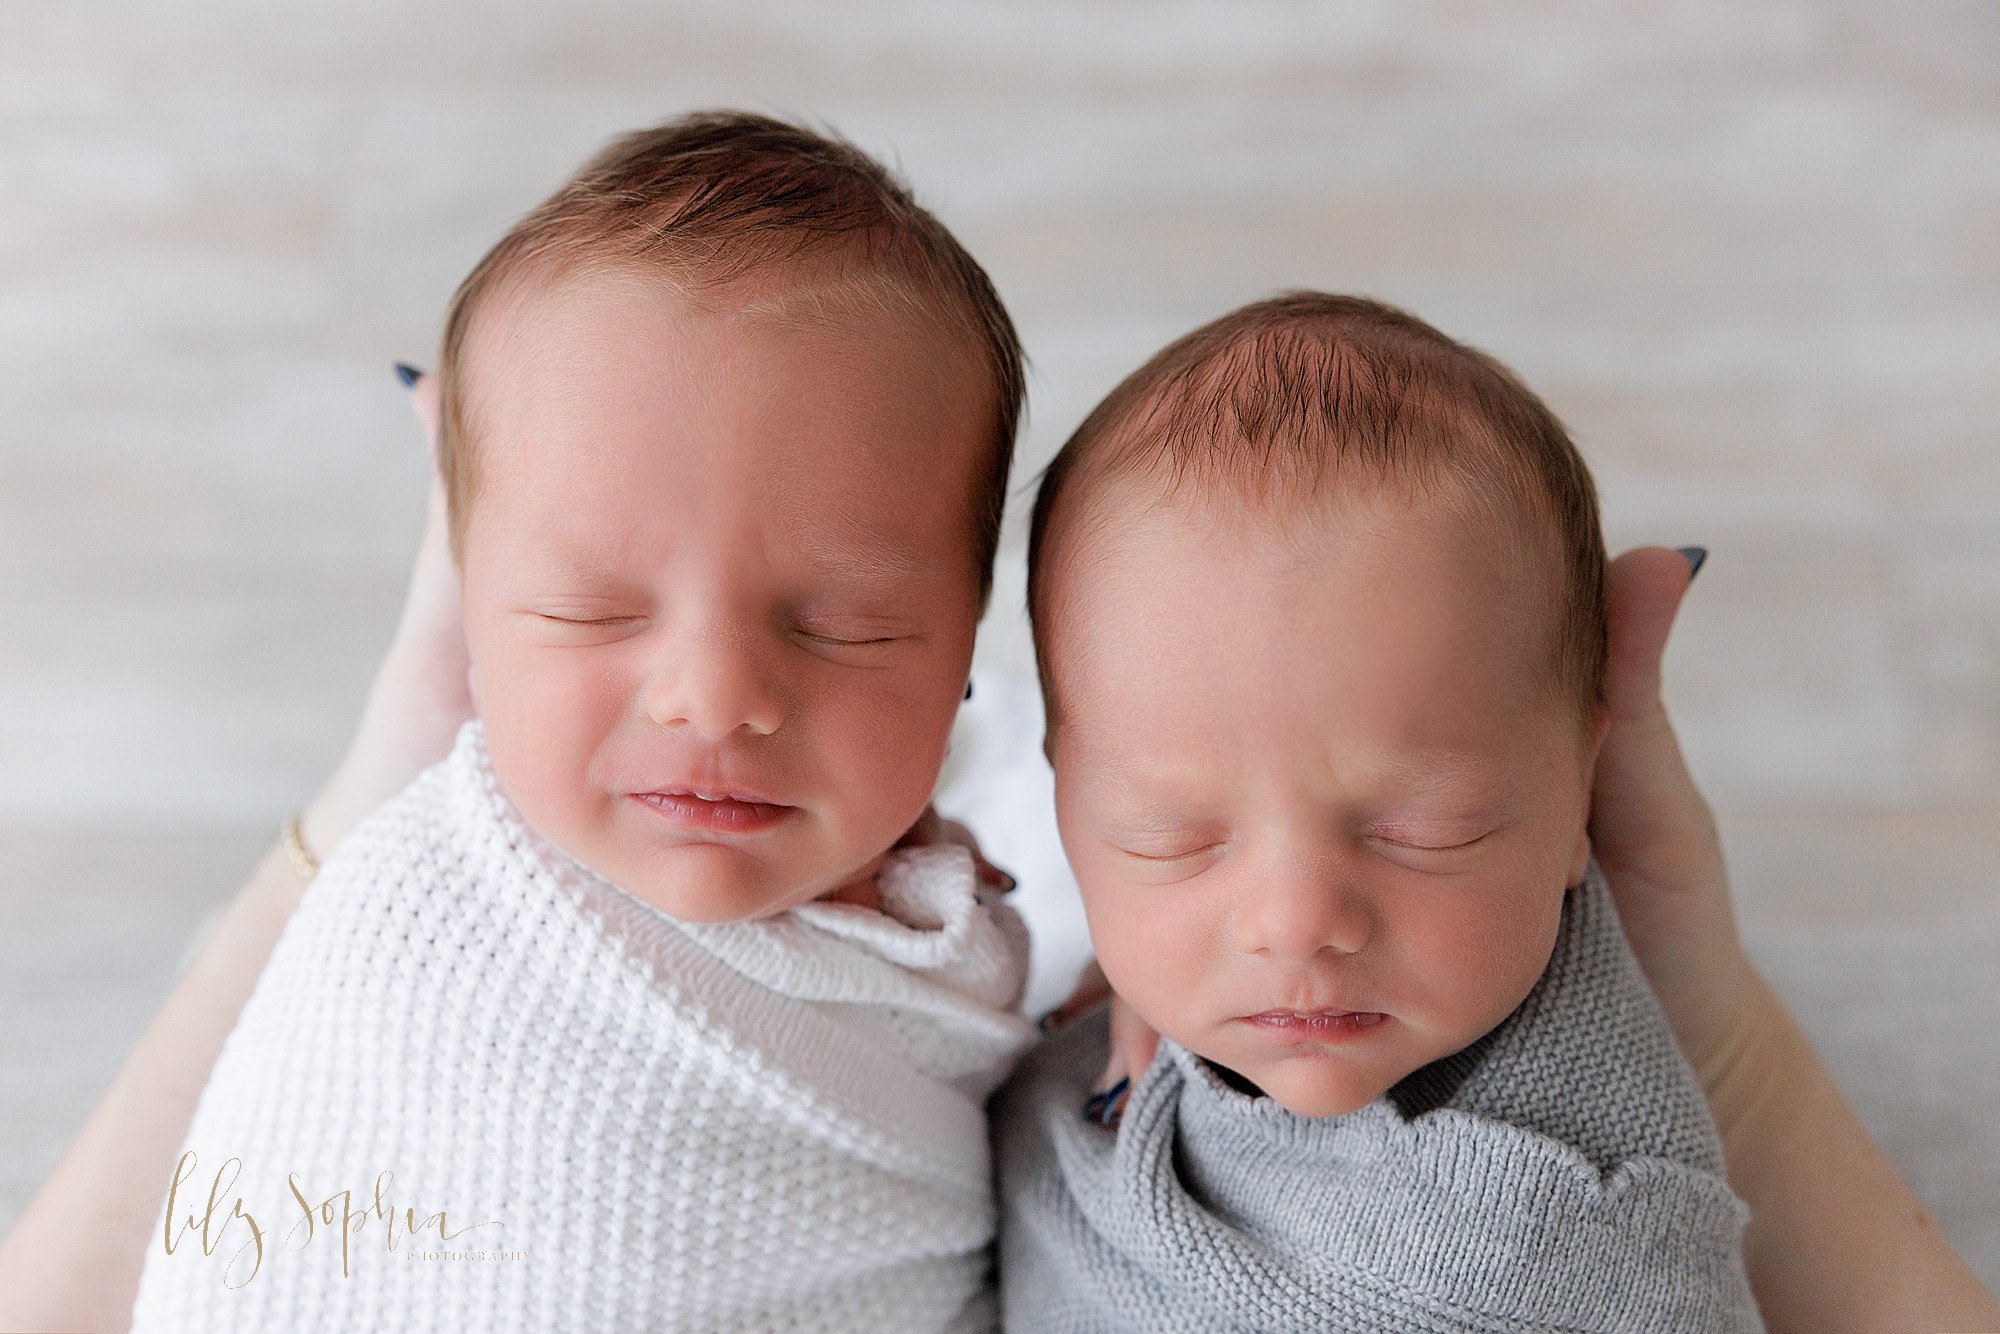 intown-atlanta-morningside-decatur-brookhaven-buckhead-studio-natural-light-newborn-baby-boy-twins-family-photoshoot_5937.jpg